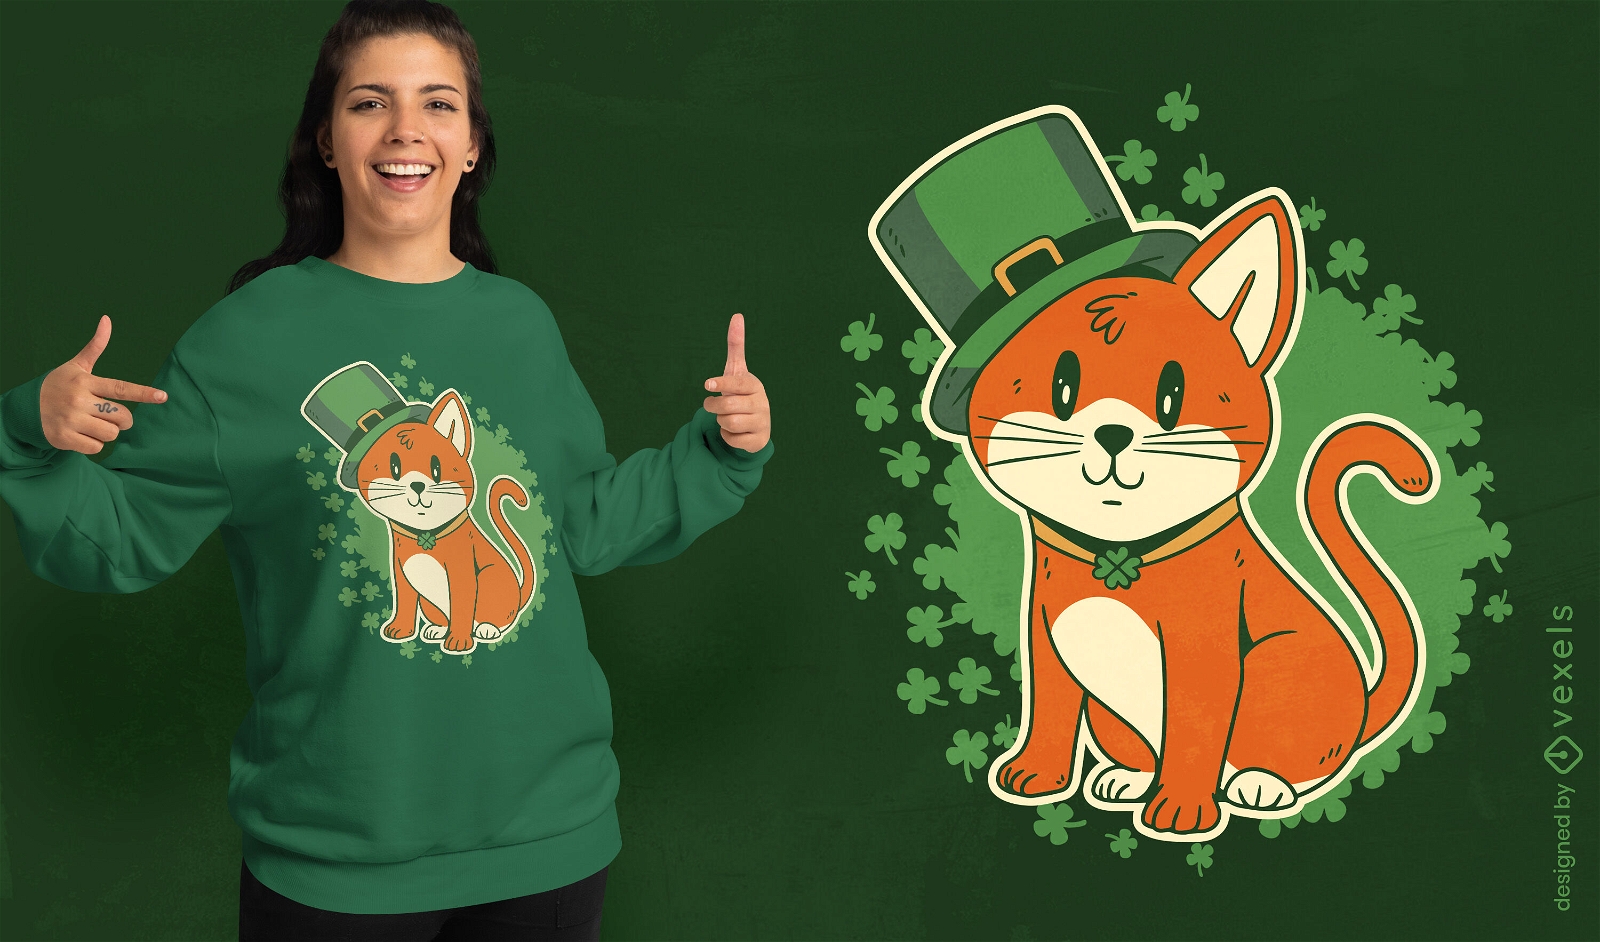 Animal gato com design de camiseta de chap?u irland?s